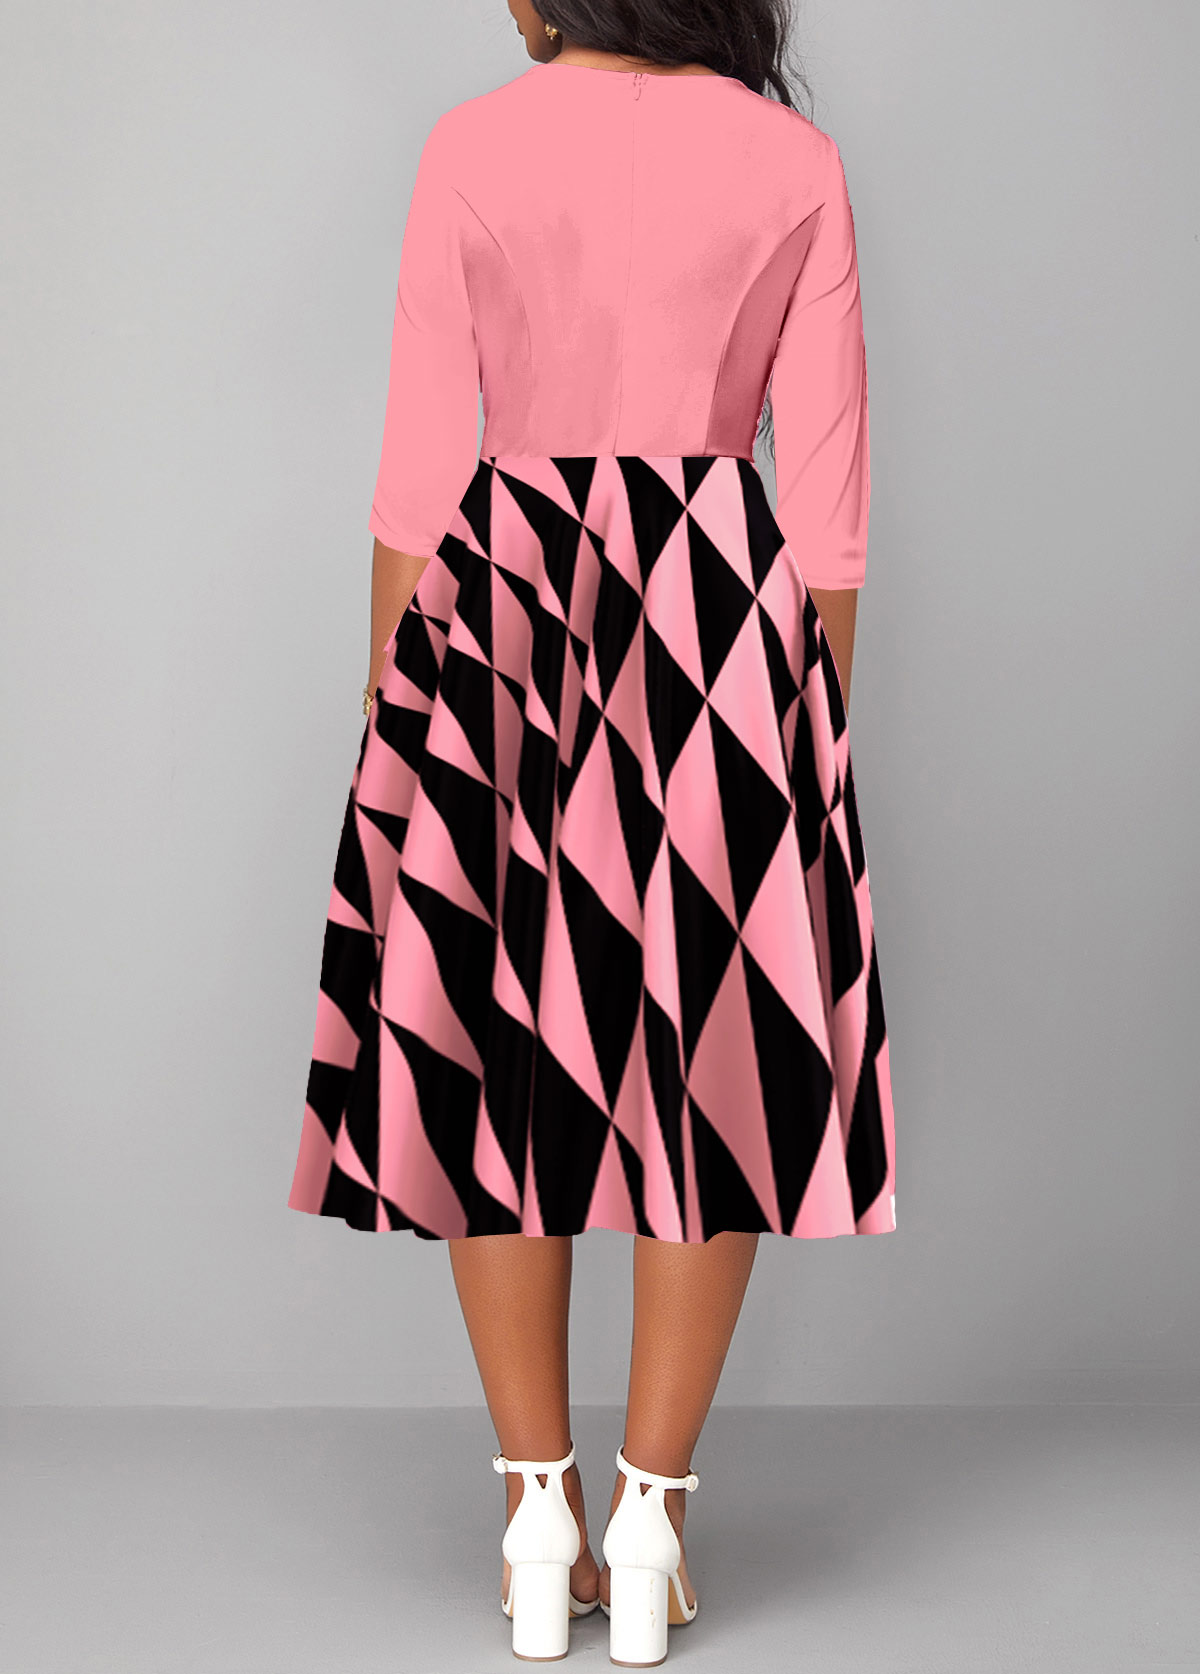 Geometric Print Twist Black Three Quarter Length Sleeve Dress